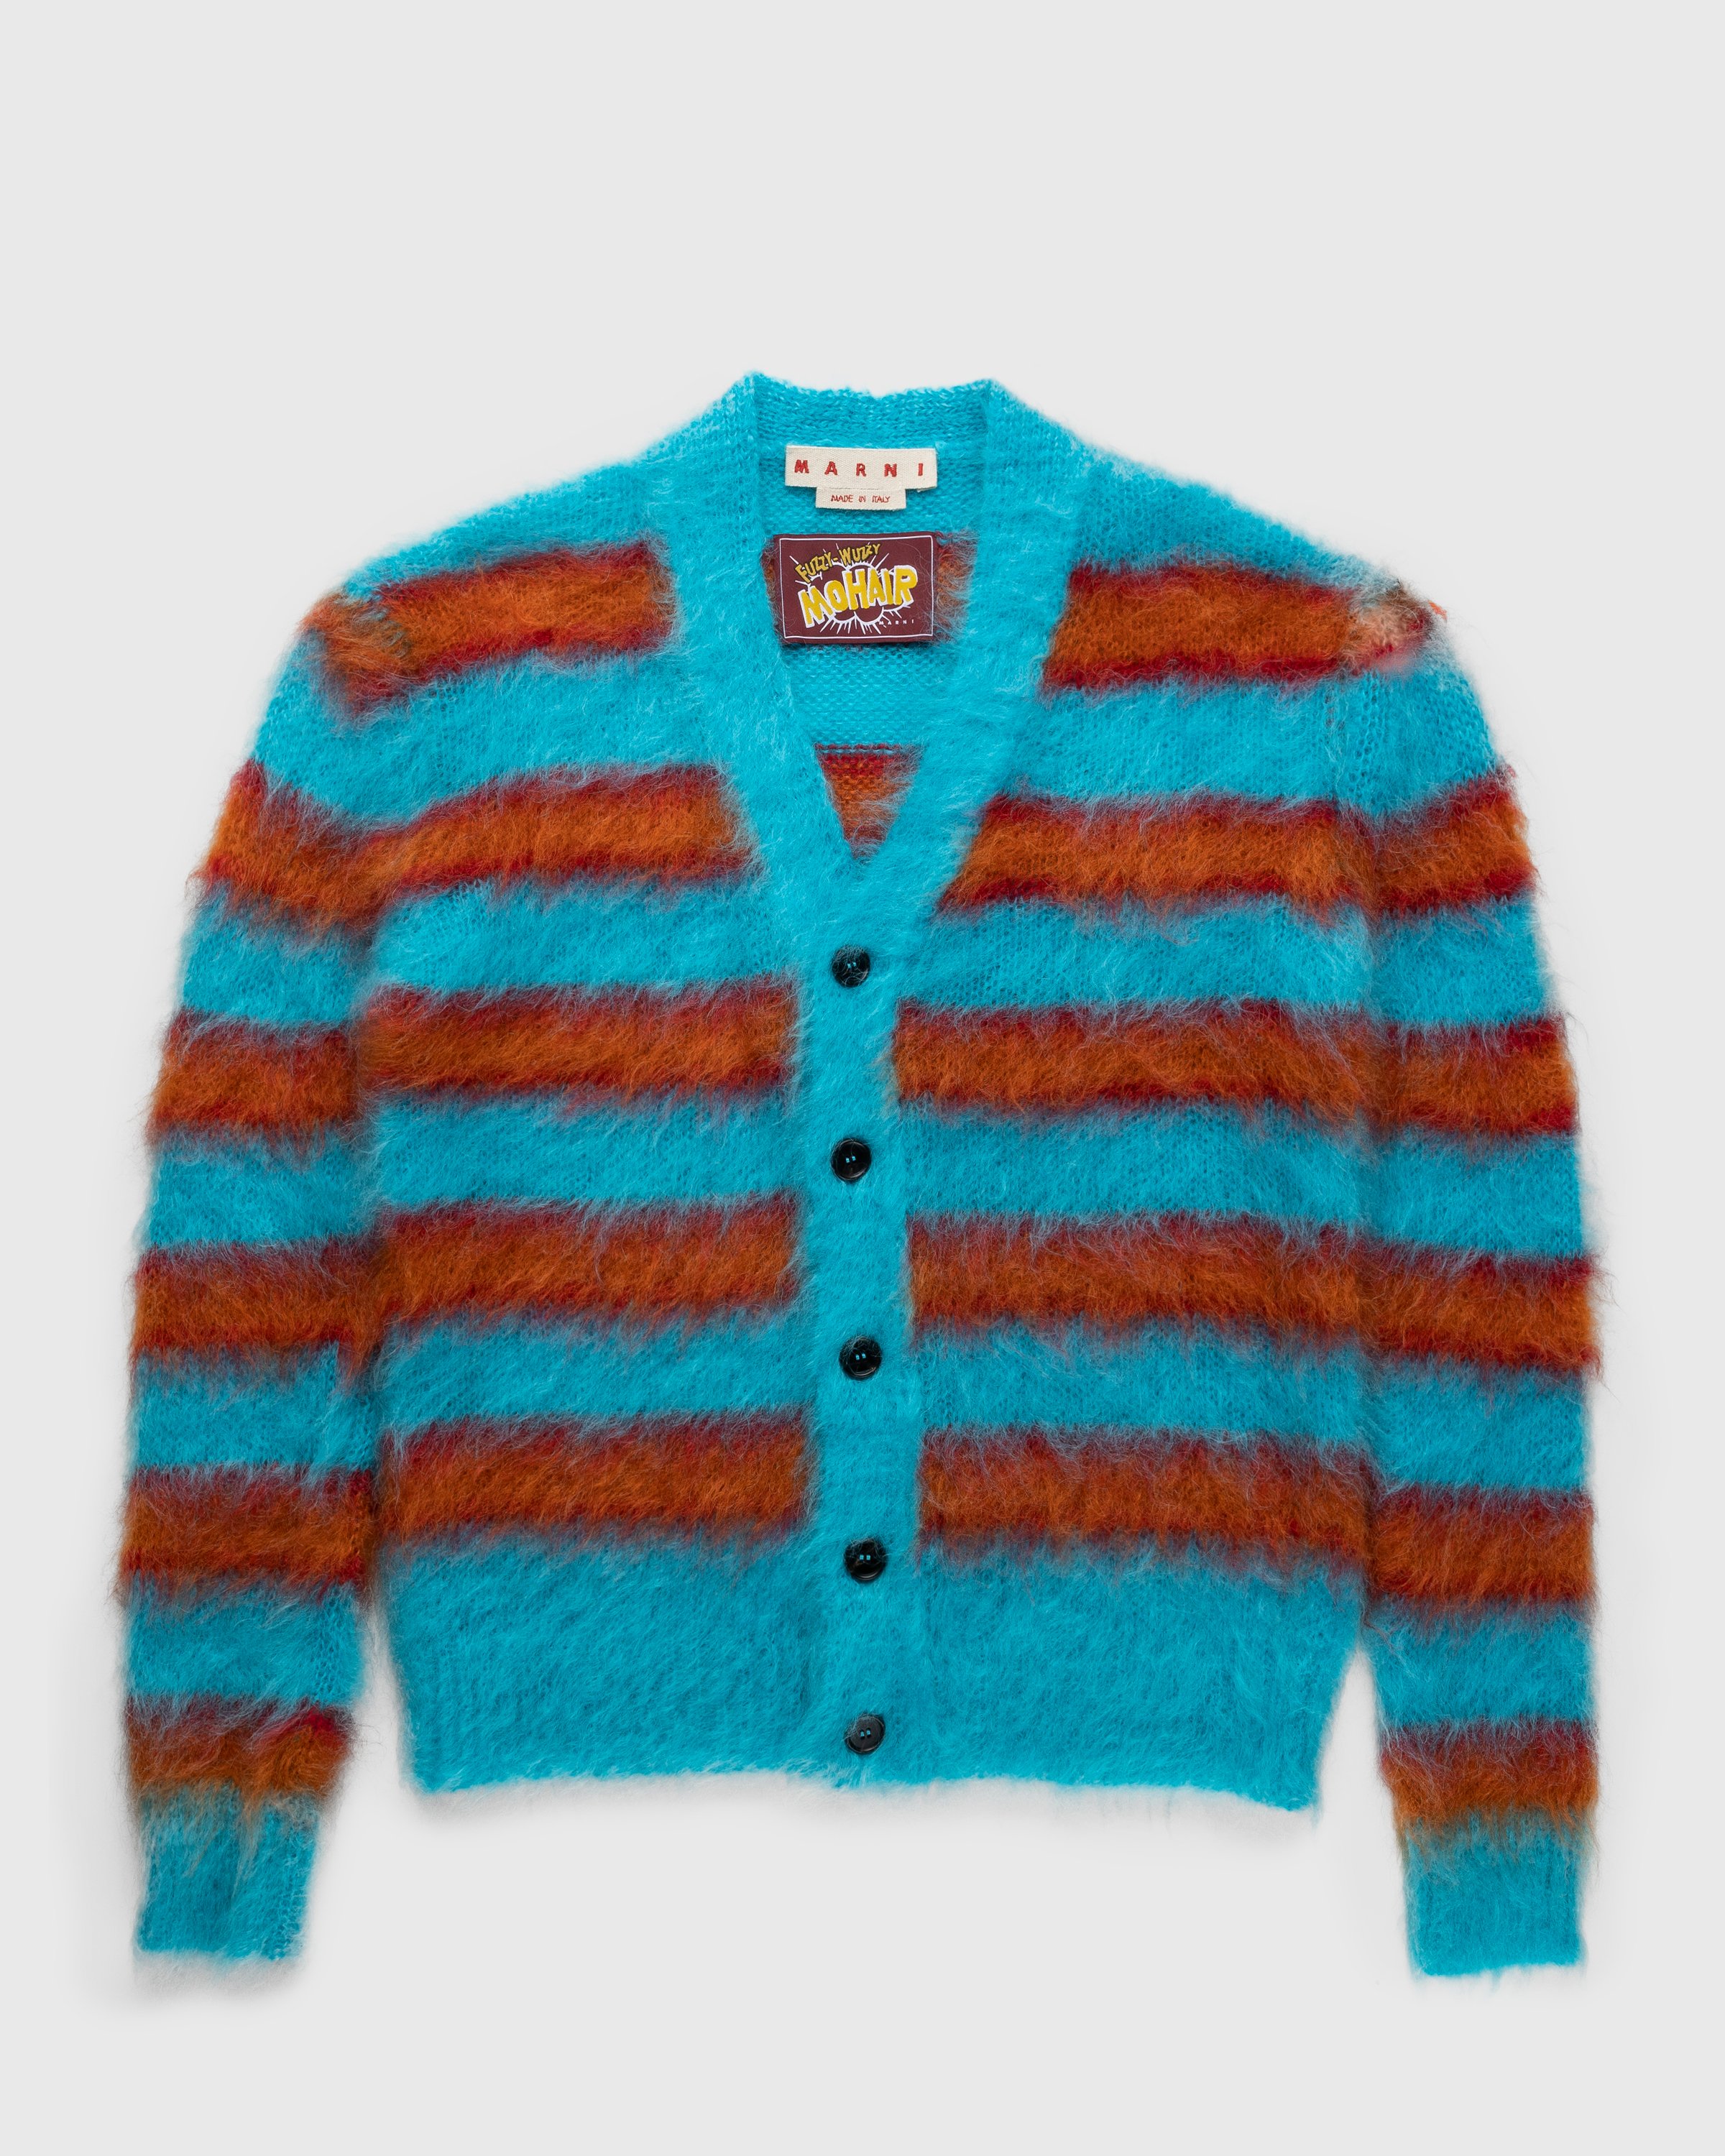 Marni - Striped Mohair Cardigan Multi - Clothing - Multi - Image 1